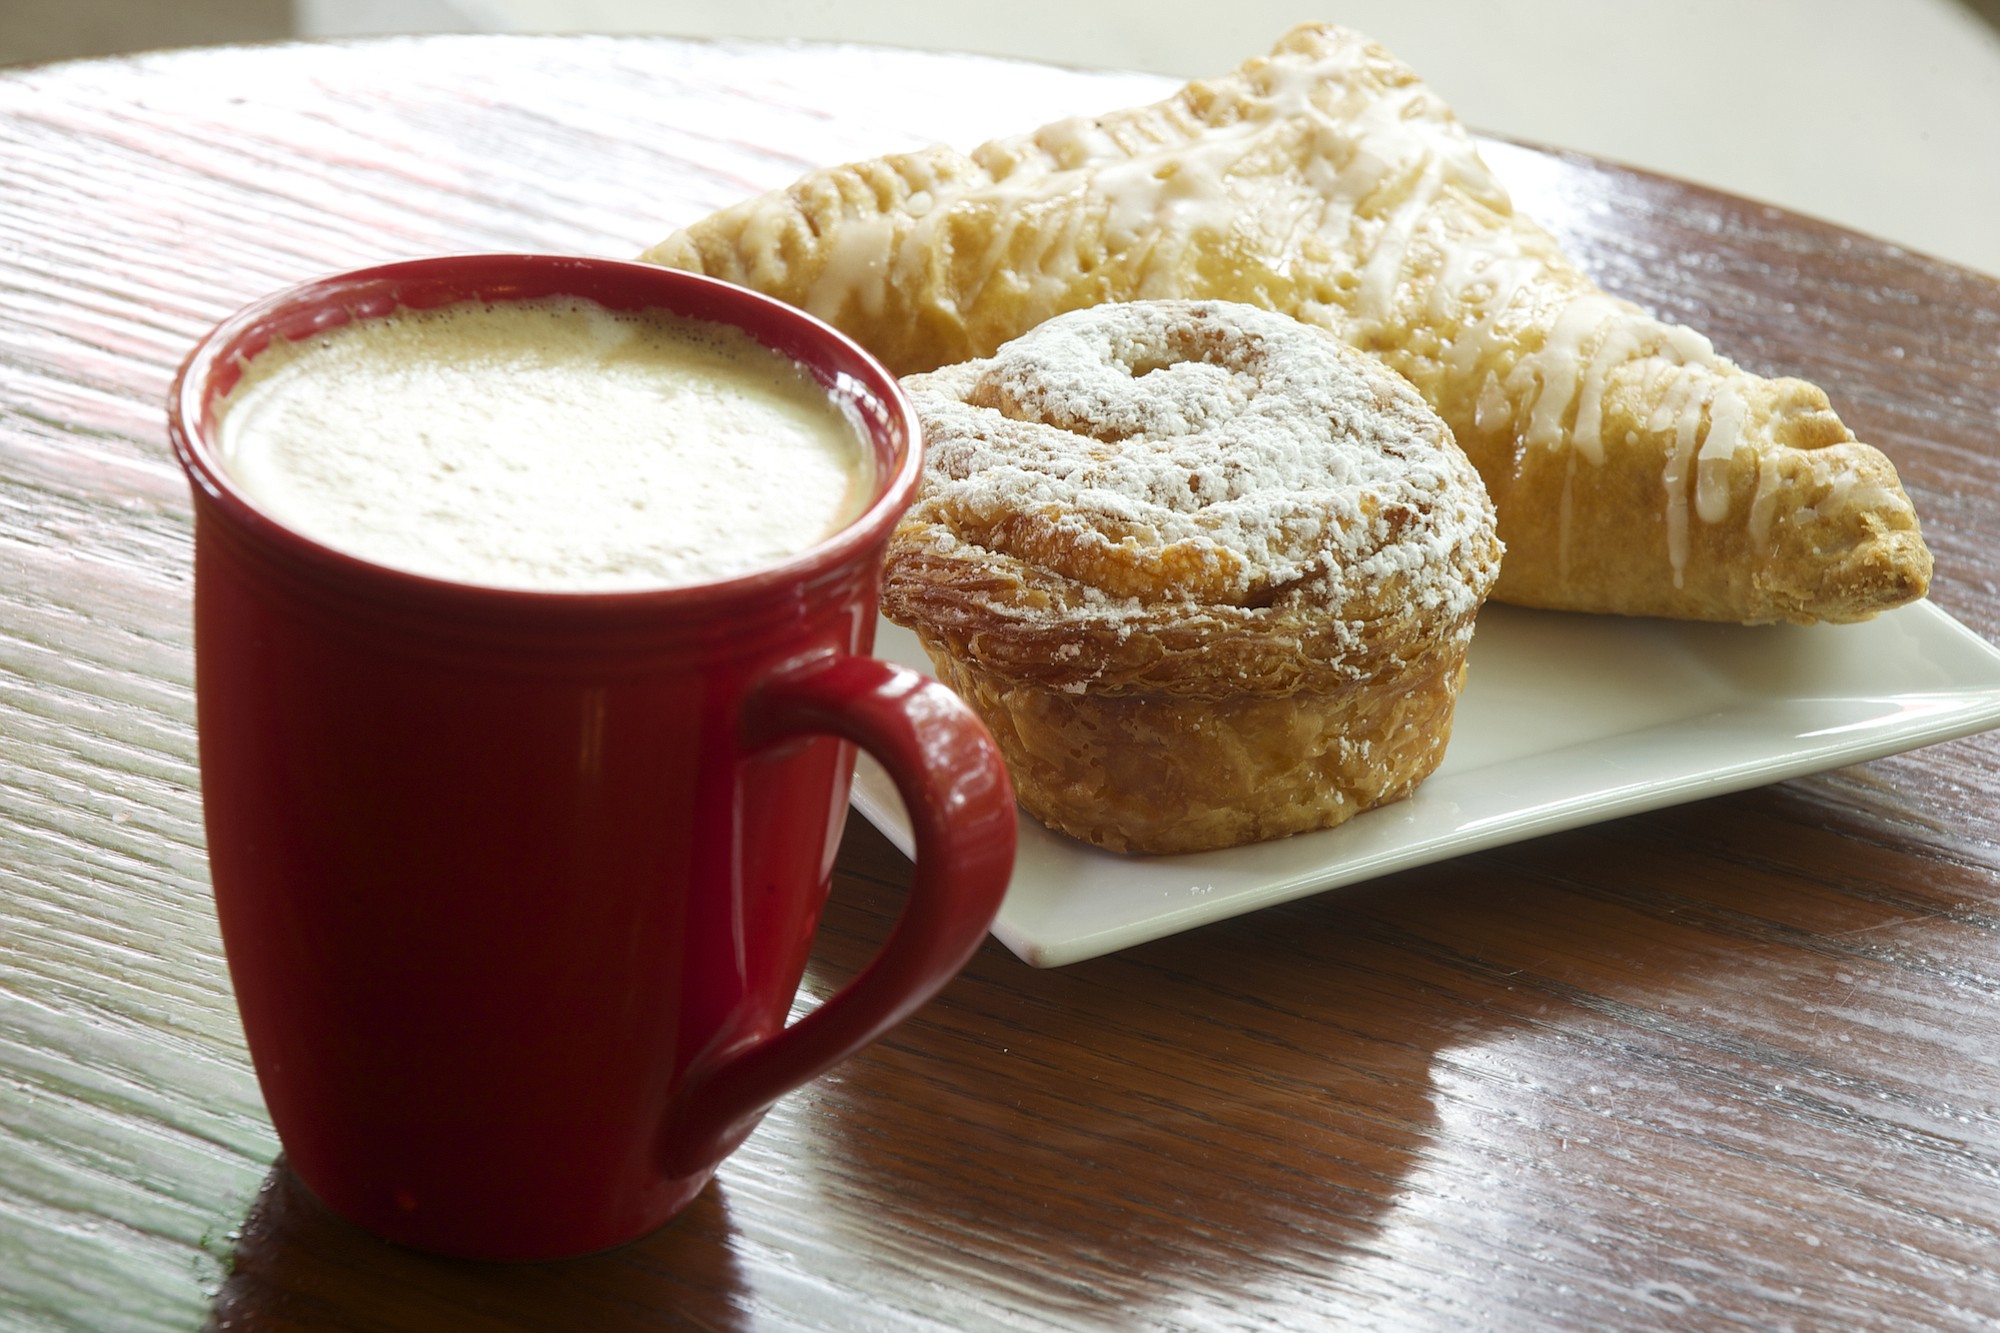 Meredine bun, apple turnover and a latte at Caffe Piccolo.